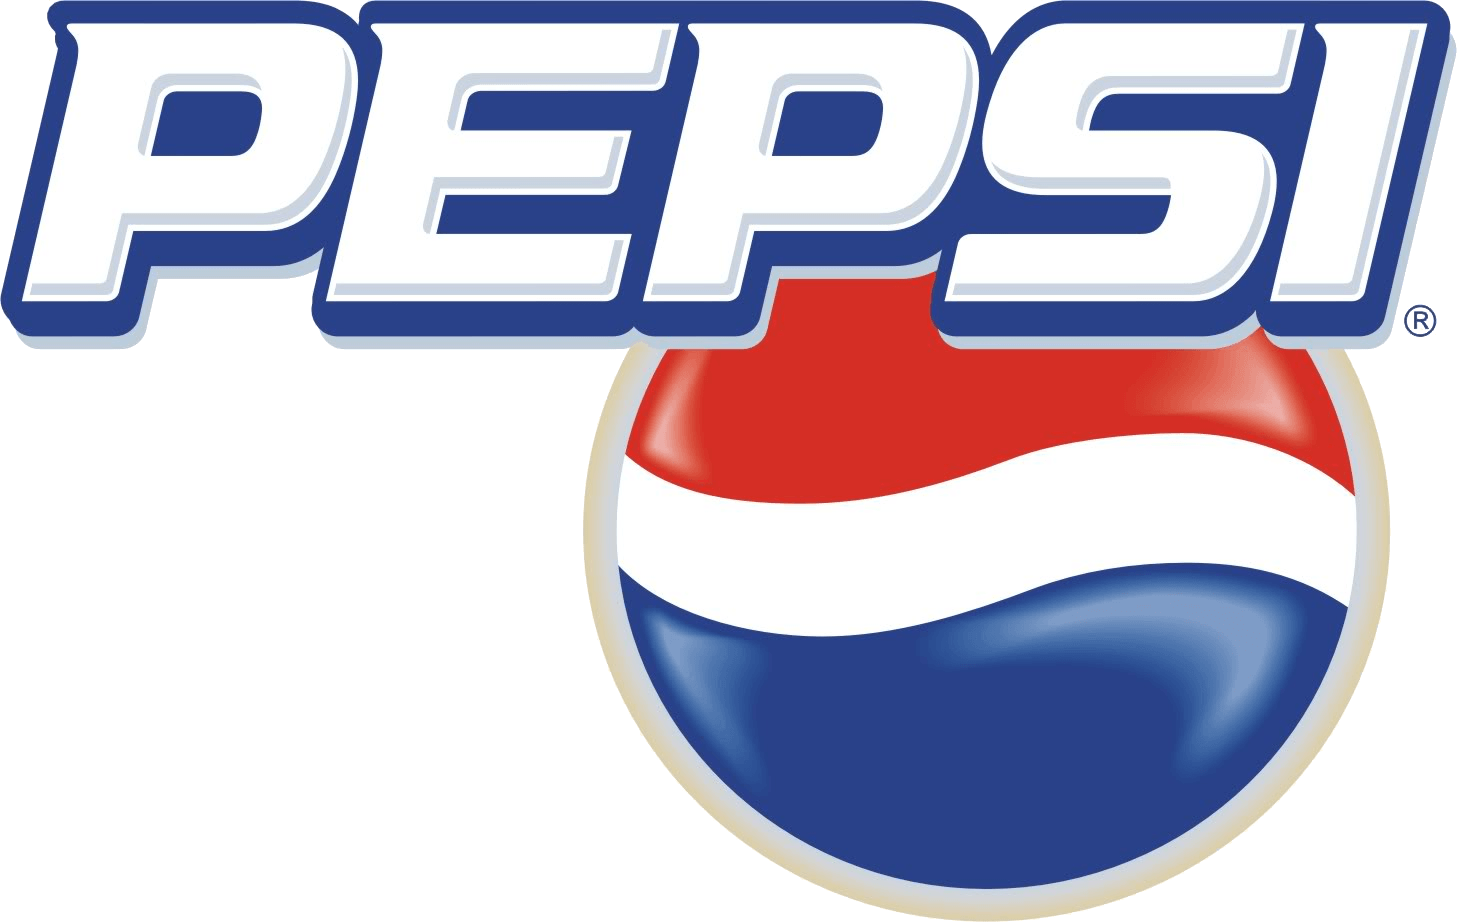 Pepsi 1971 Logo - Pepsi | Logopedia | FANDOM powered by Wikia